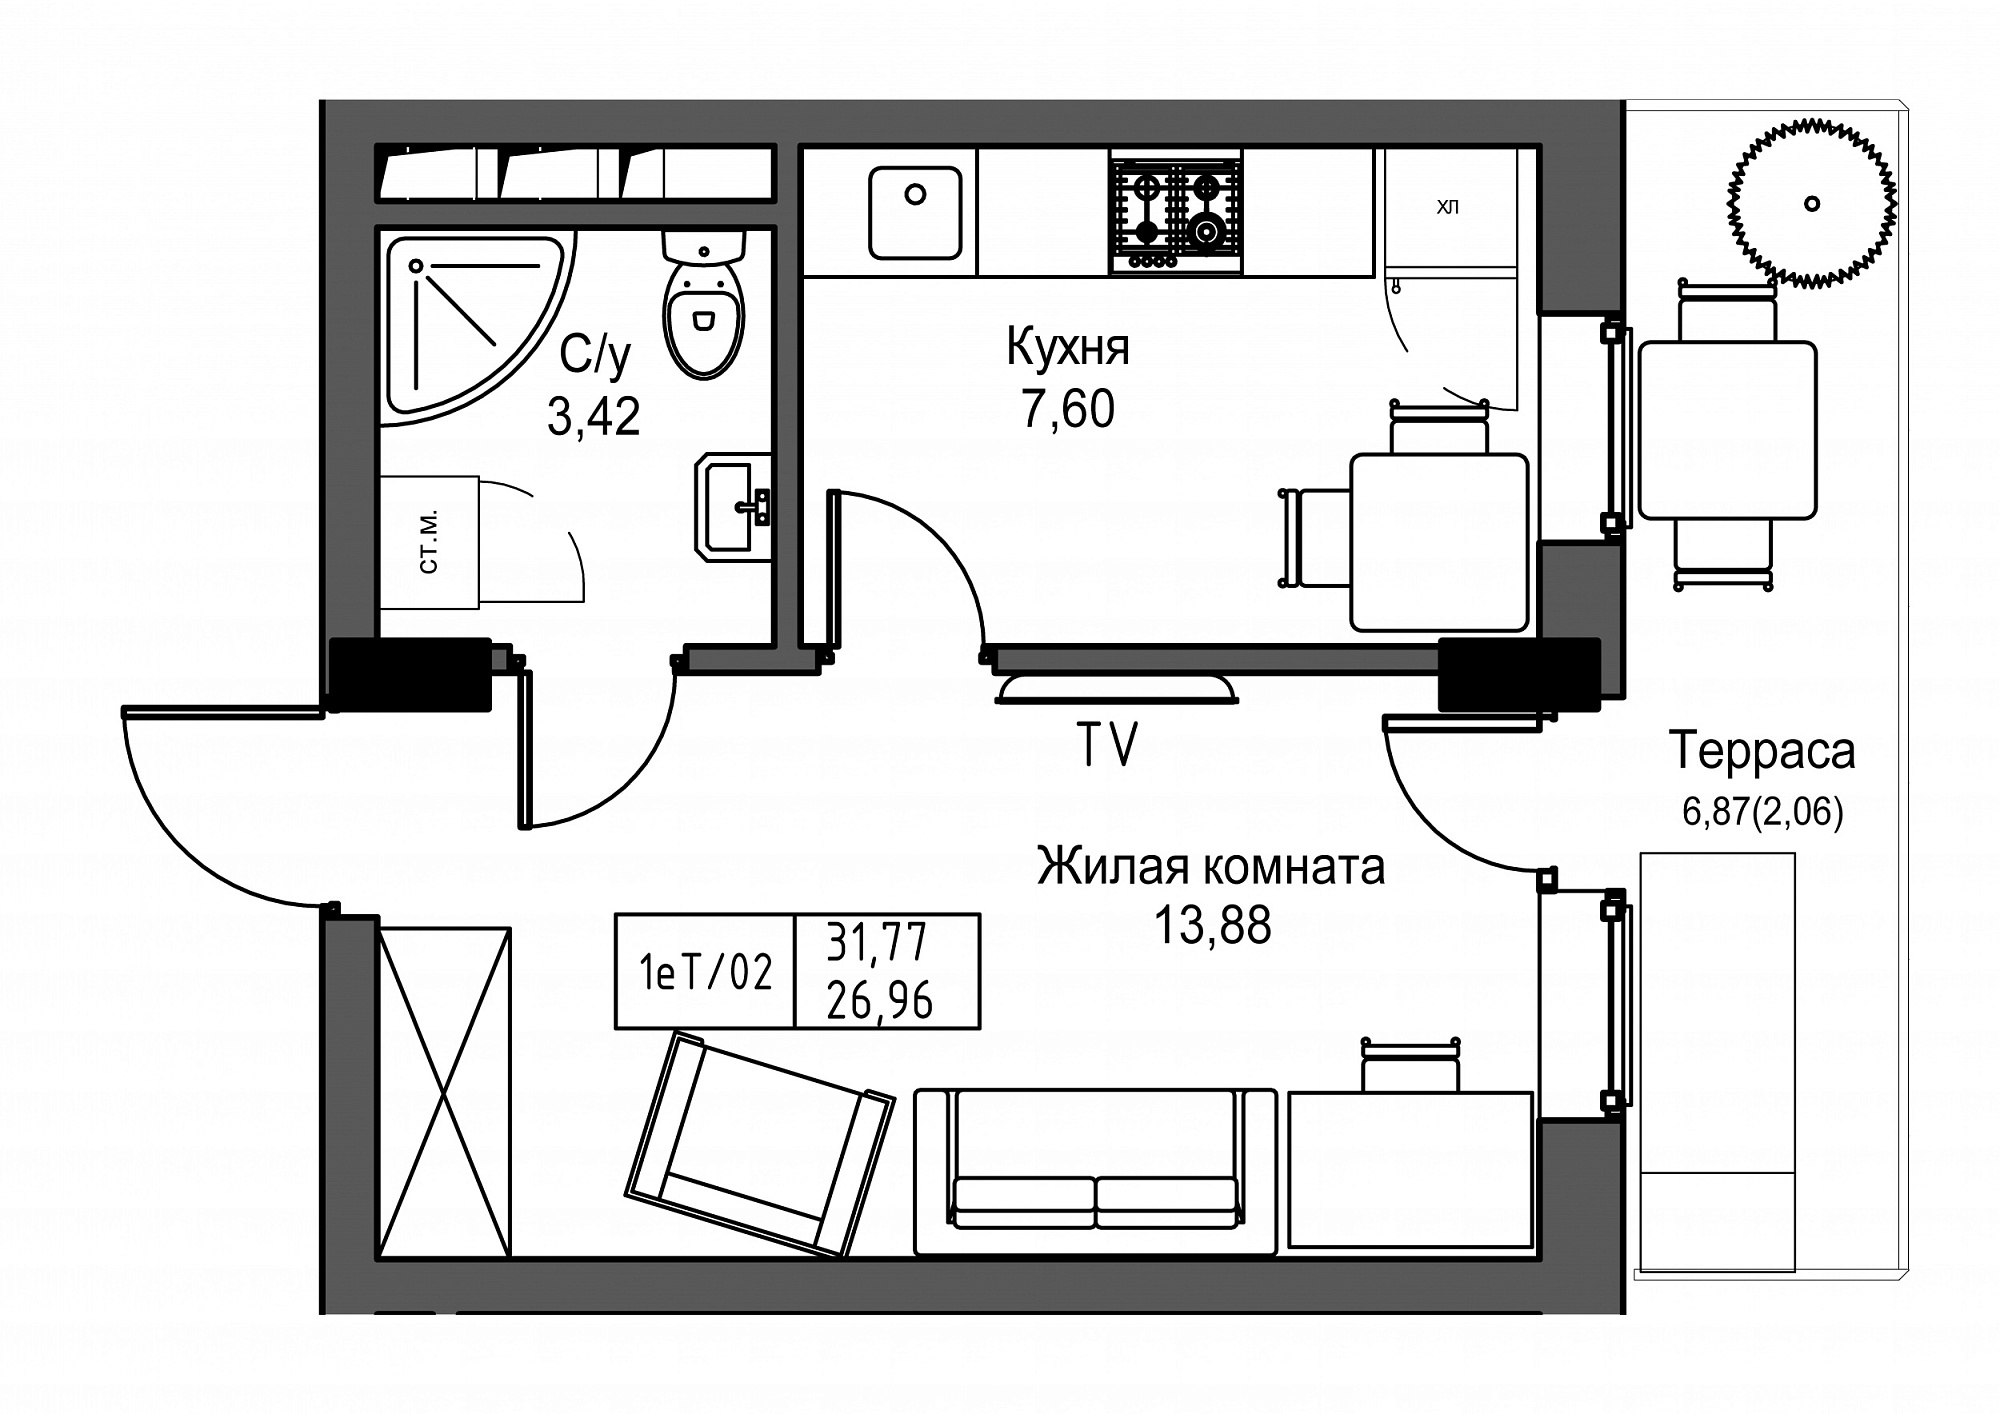 Планування 1-к квартира площею 26.96м2, UM-003-02/0003.